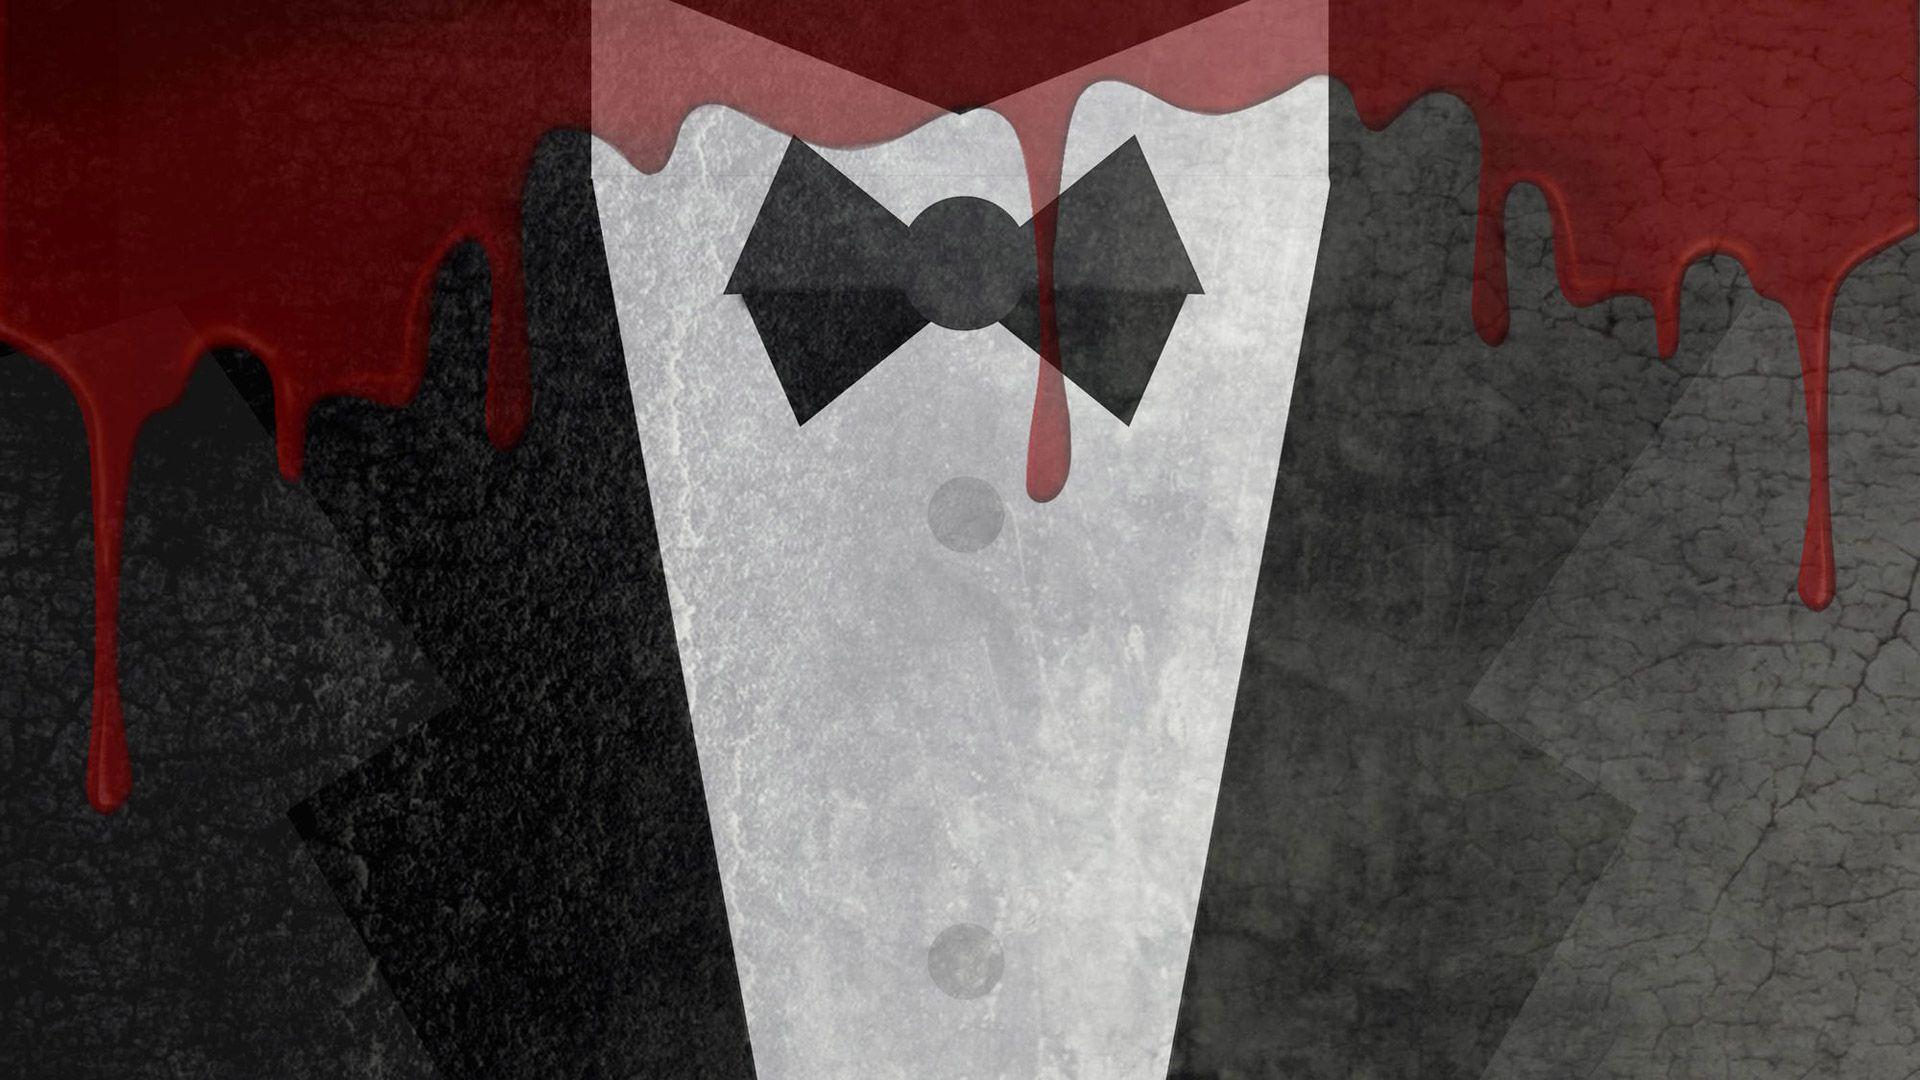 Gentleman Blood Minimalism, HD Artist, 4k Wallpaper, Image